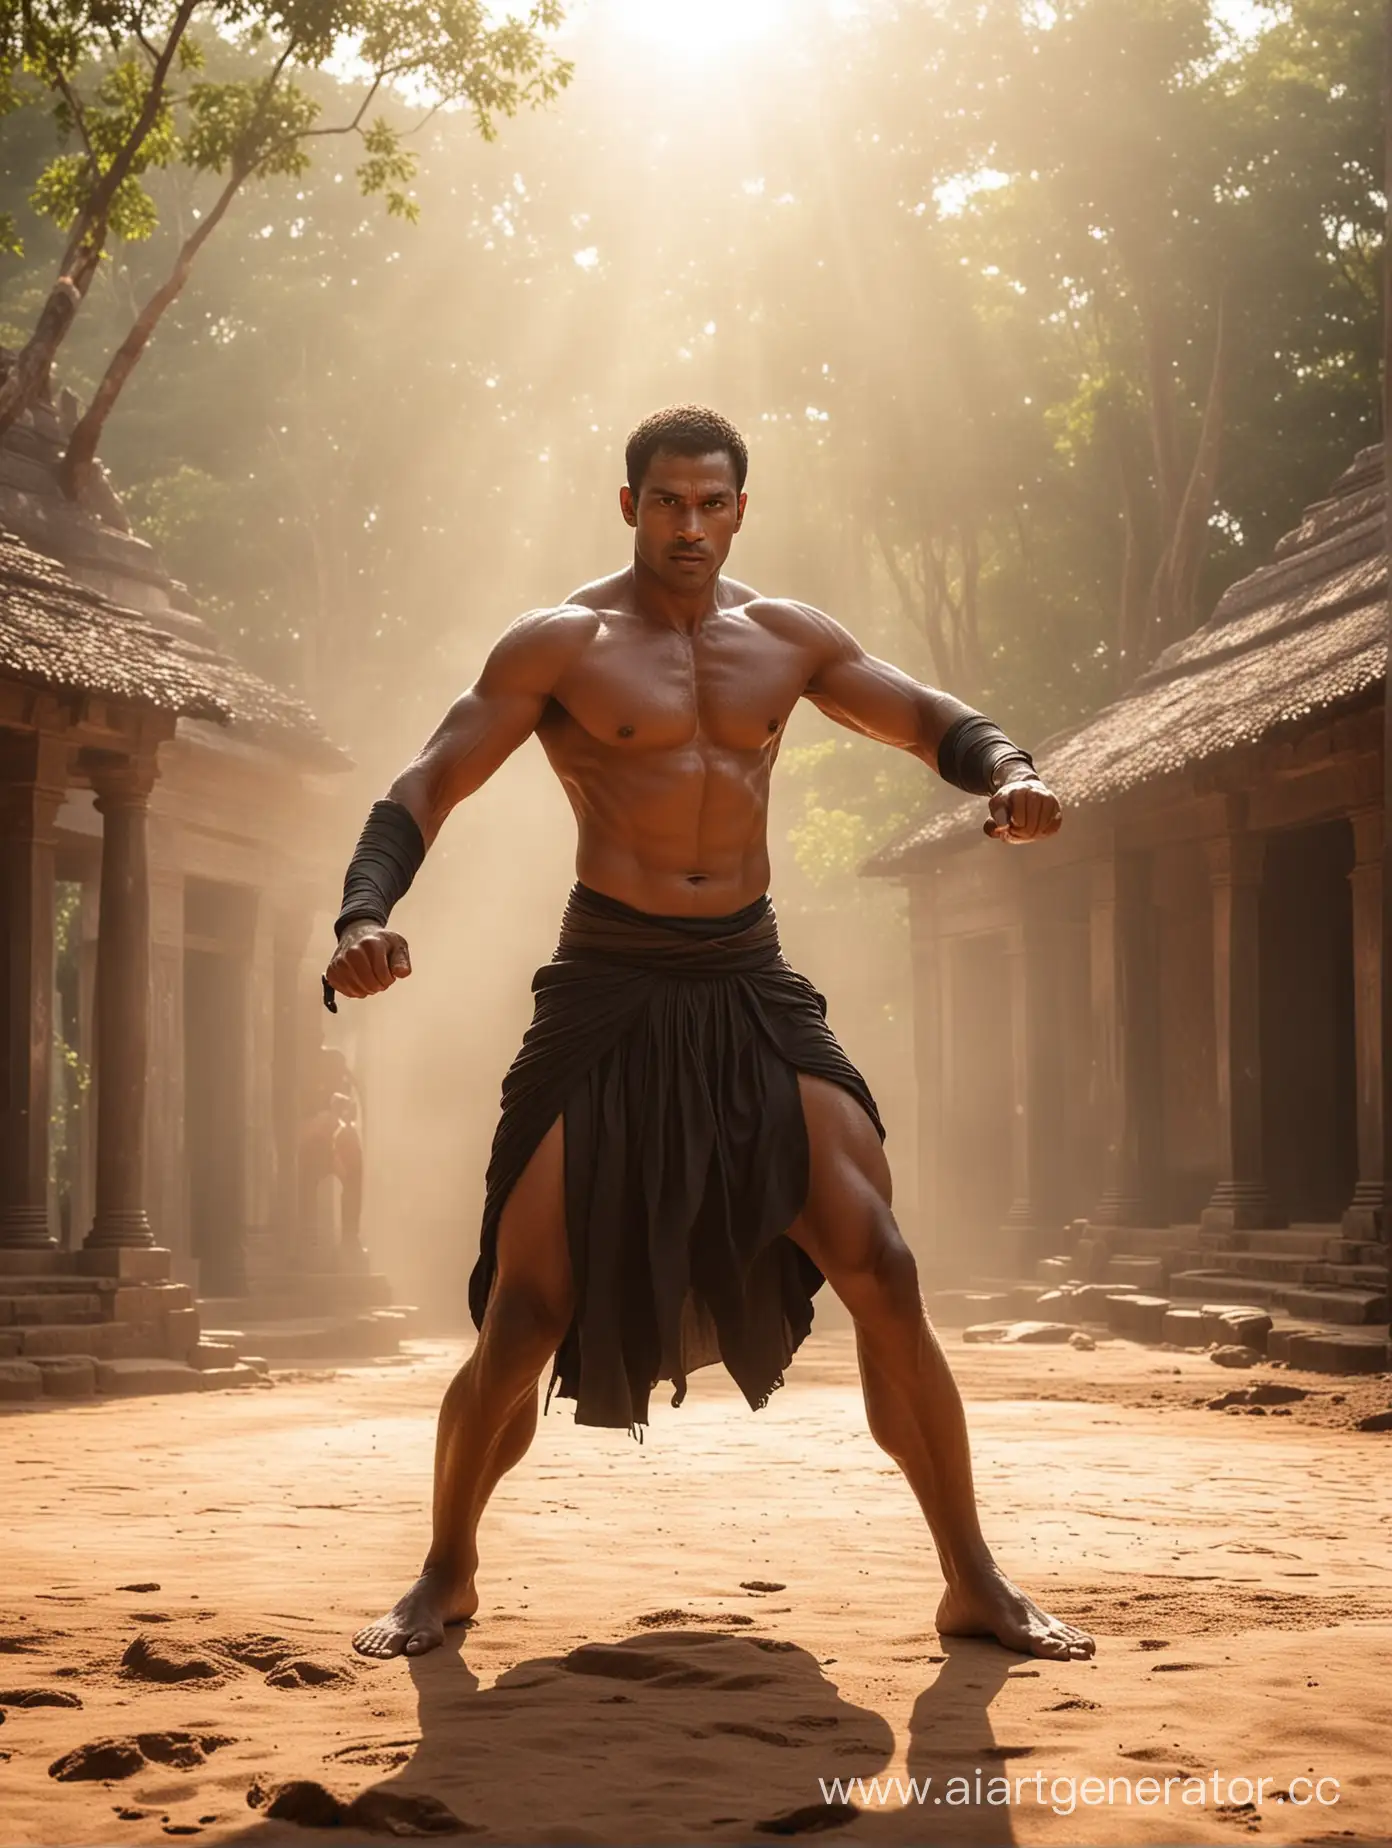 Muscular-Kalaripayattu-Warrior-Demonstrating-Dynamic-Move-at-Ancient-Temple